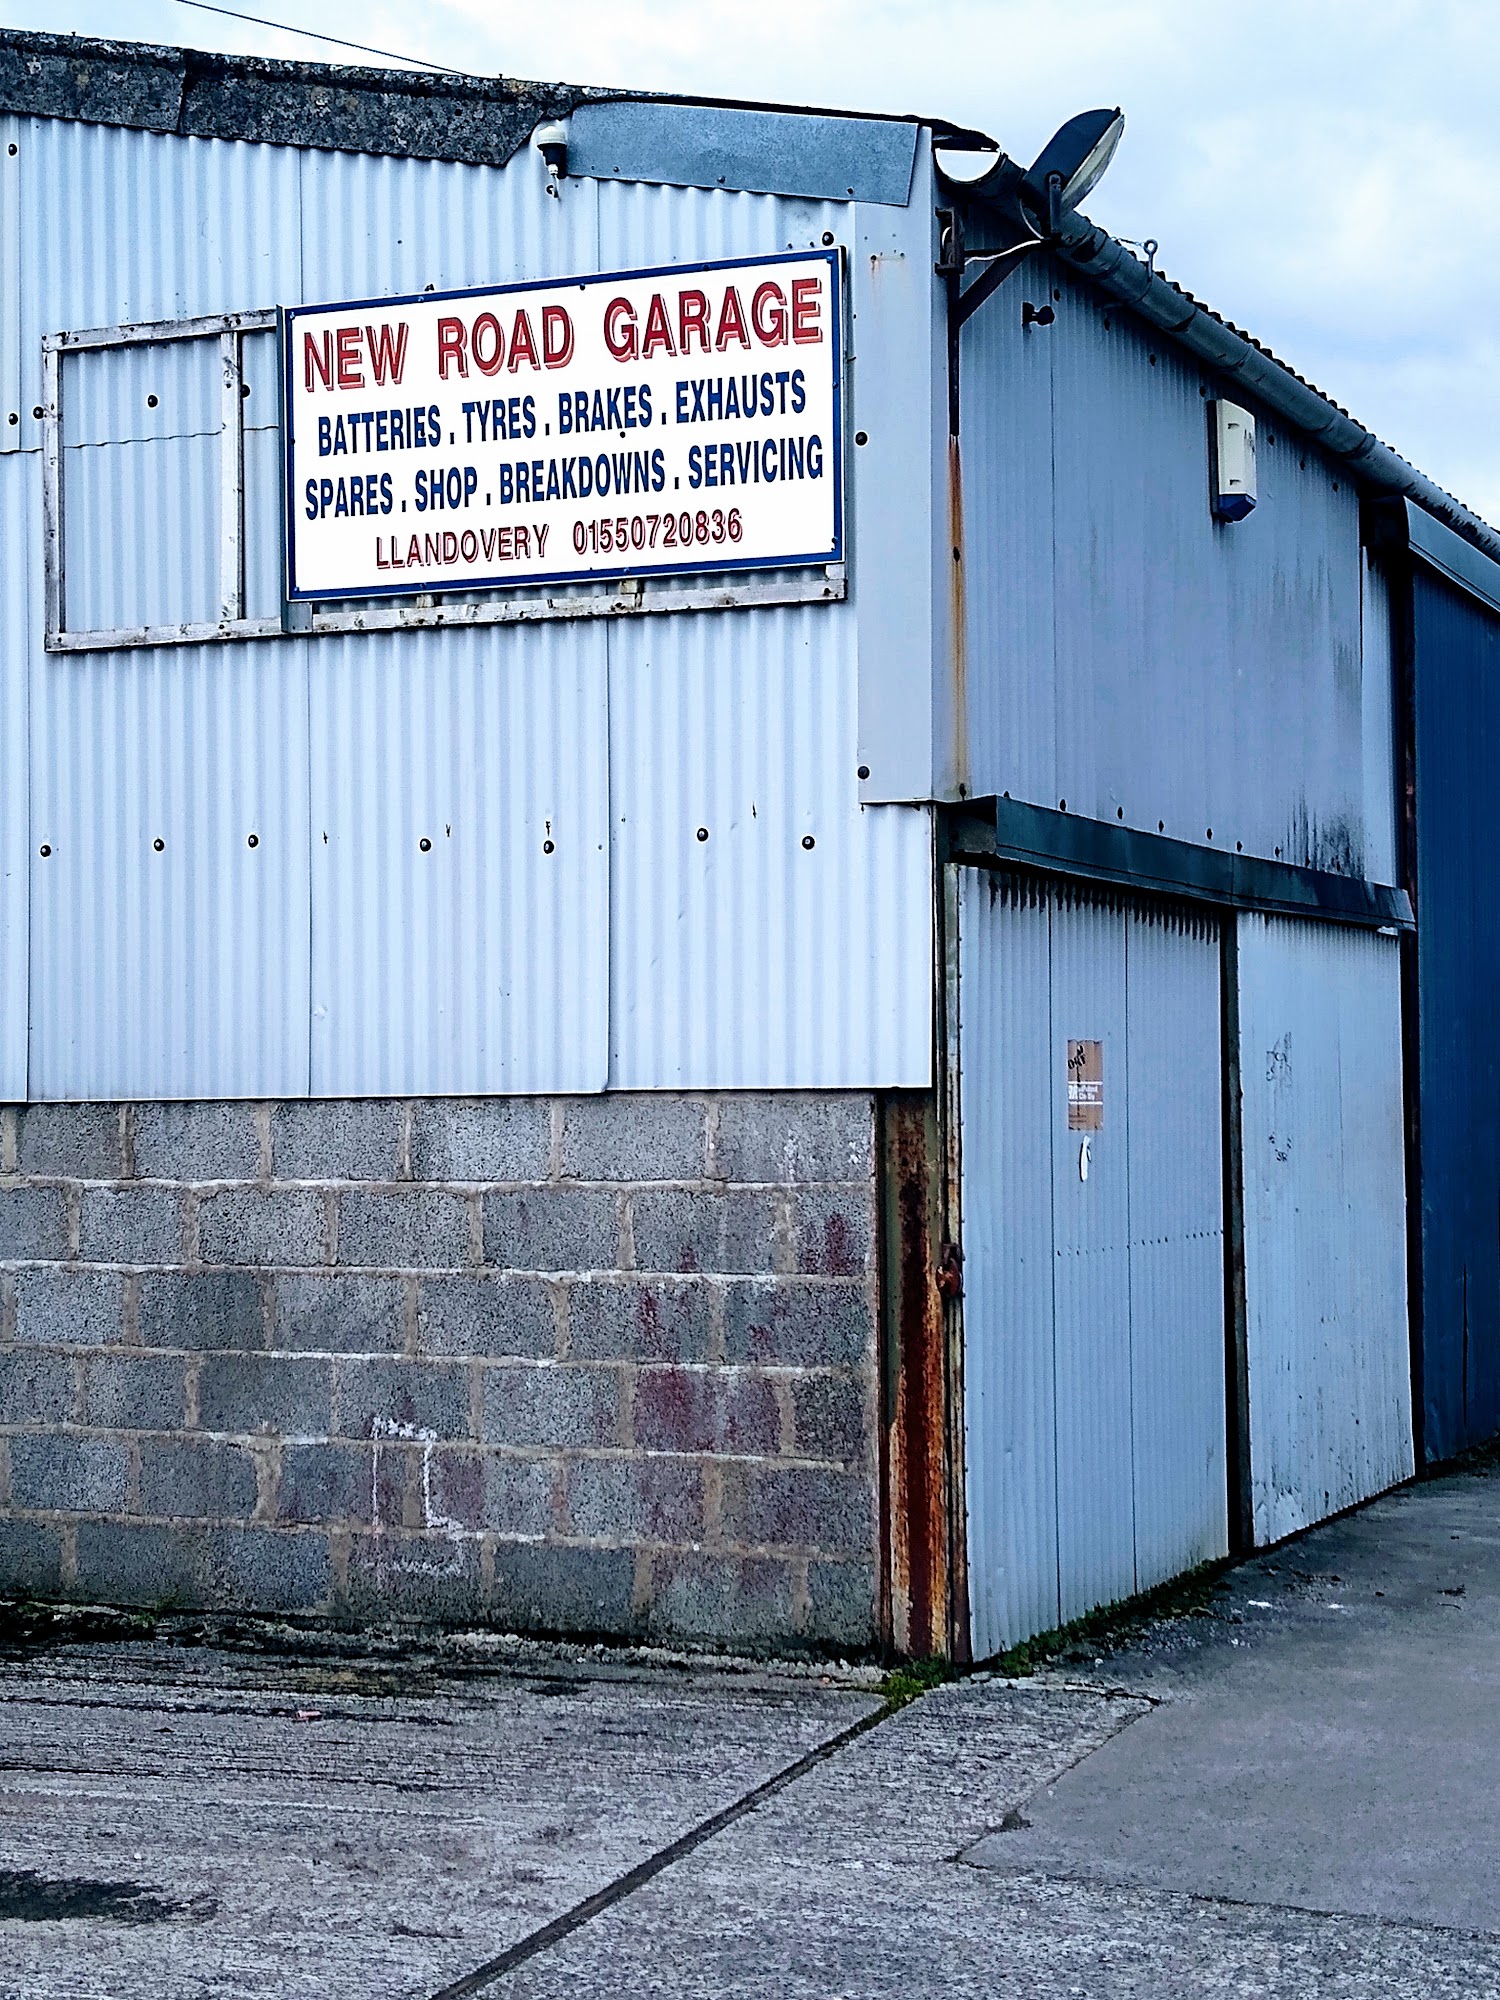 New Road Garage Llandovery Ltd